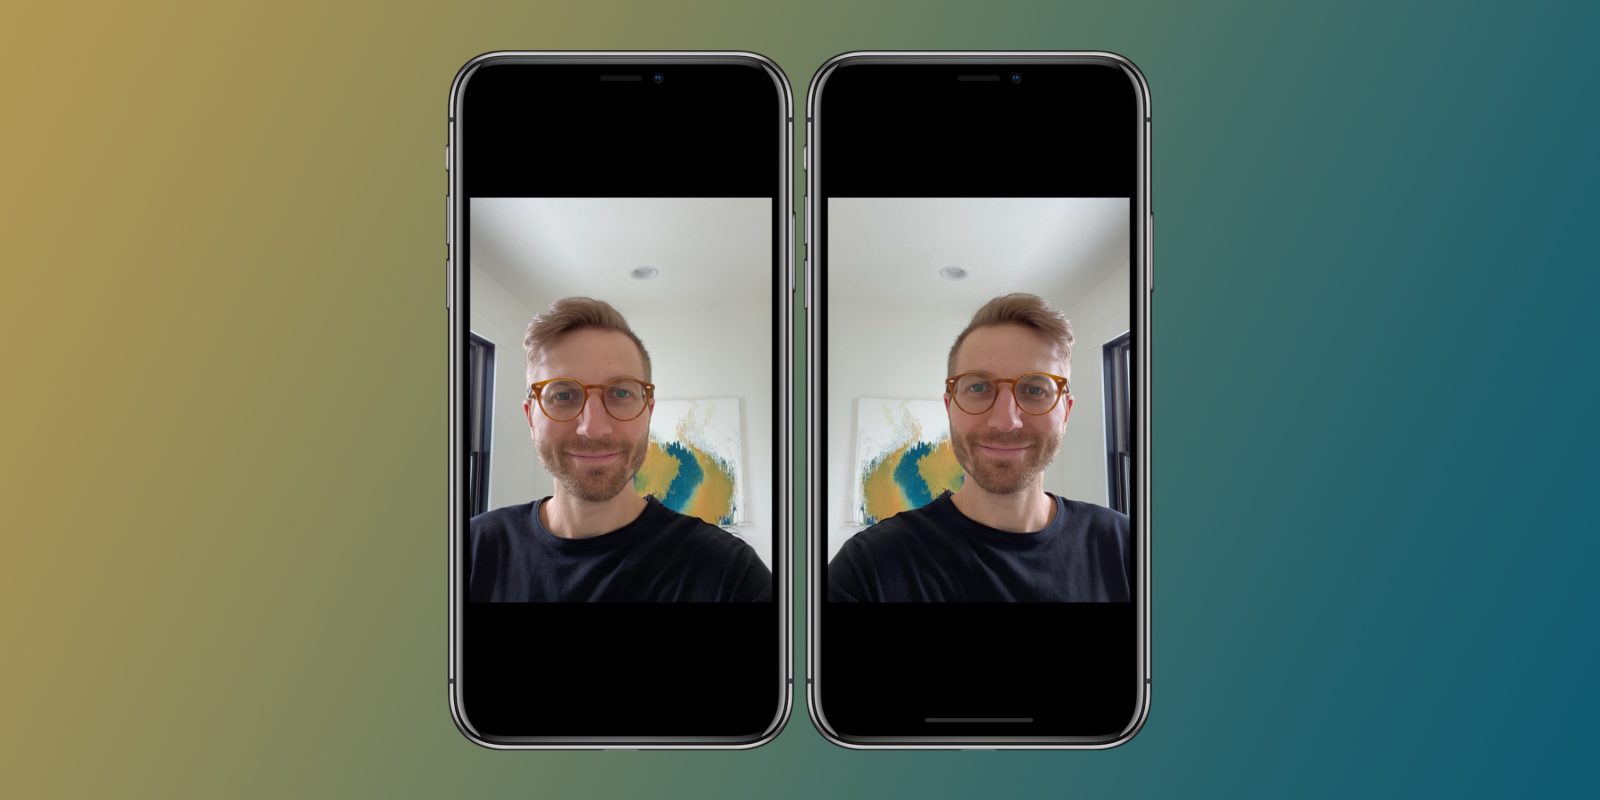 How to mirror iPhone selfies iOS 14 walkthrough